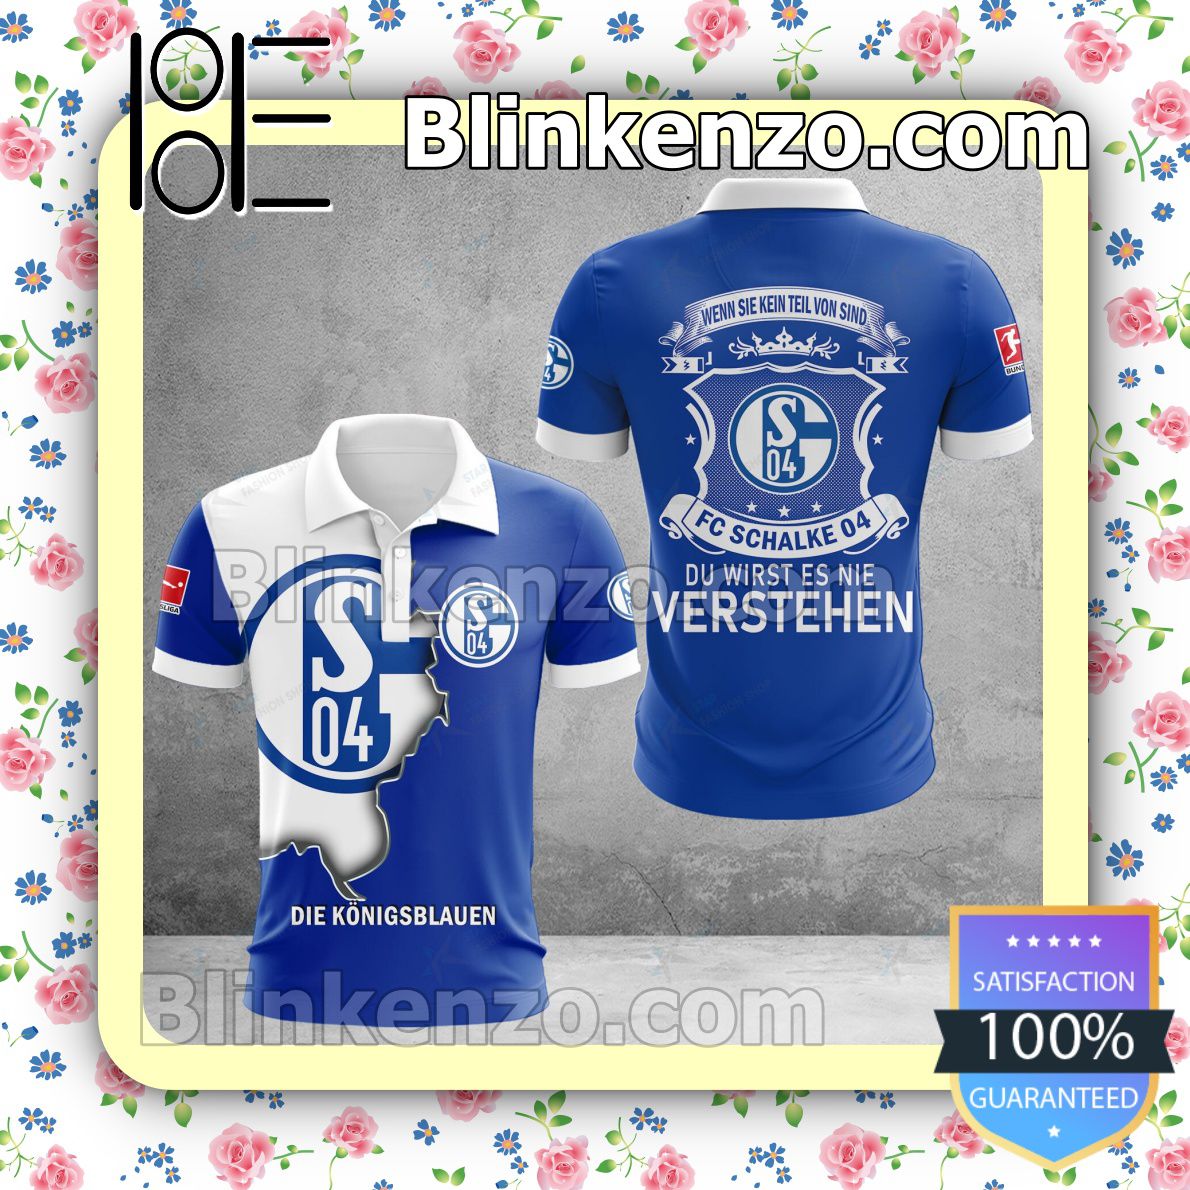 Automatisch Emotie vrachtauto Schalke 04 T-shirt, Christmas Sweater - Blinkenzo